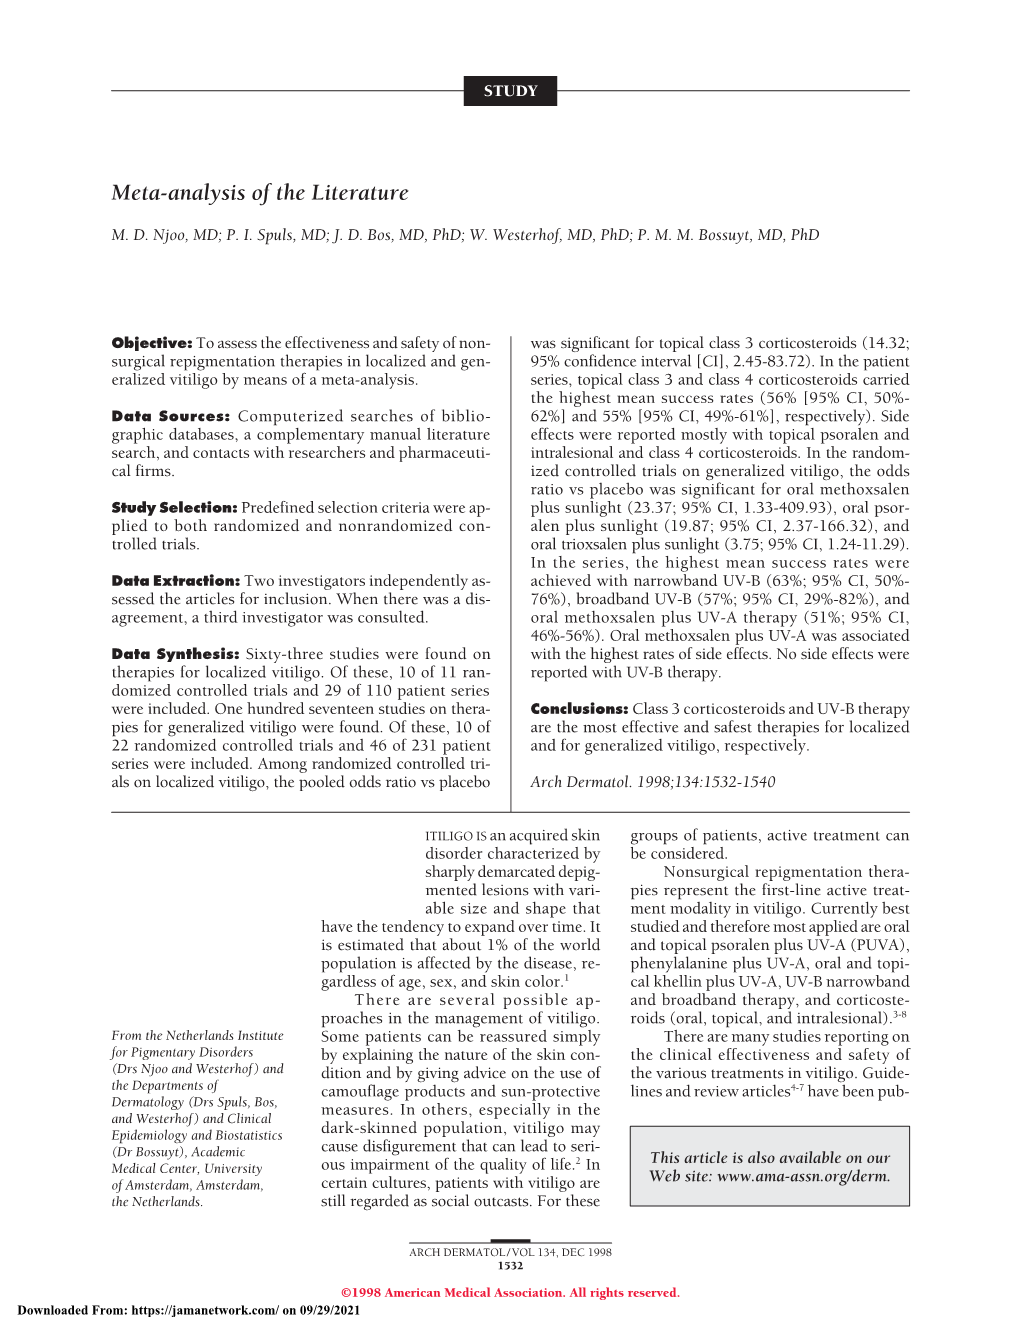 Nonsurgical Repigmentation Therapies in Vitiligo Meta-Analysis of the Literature